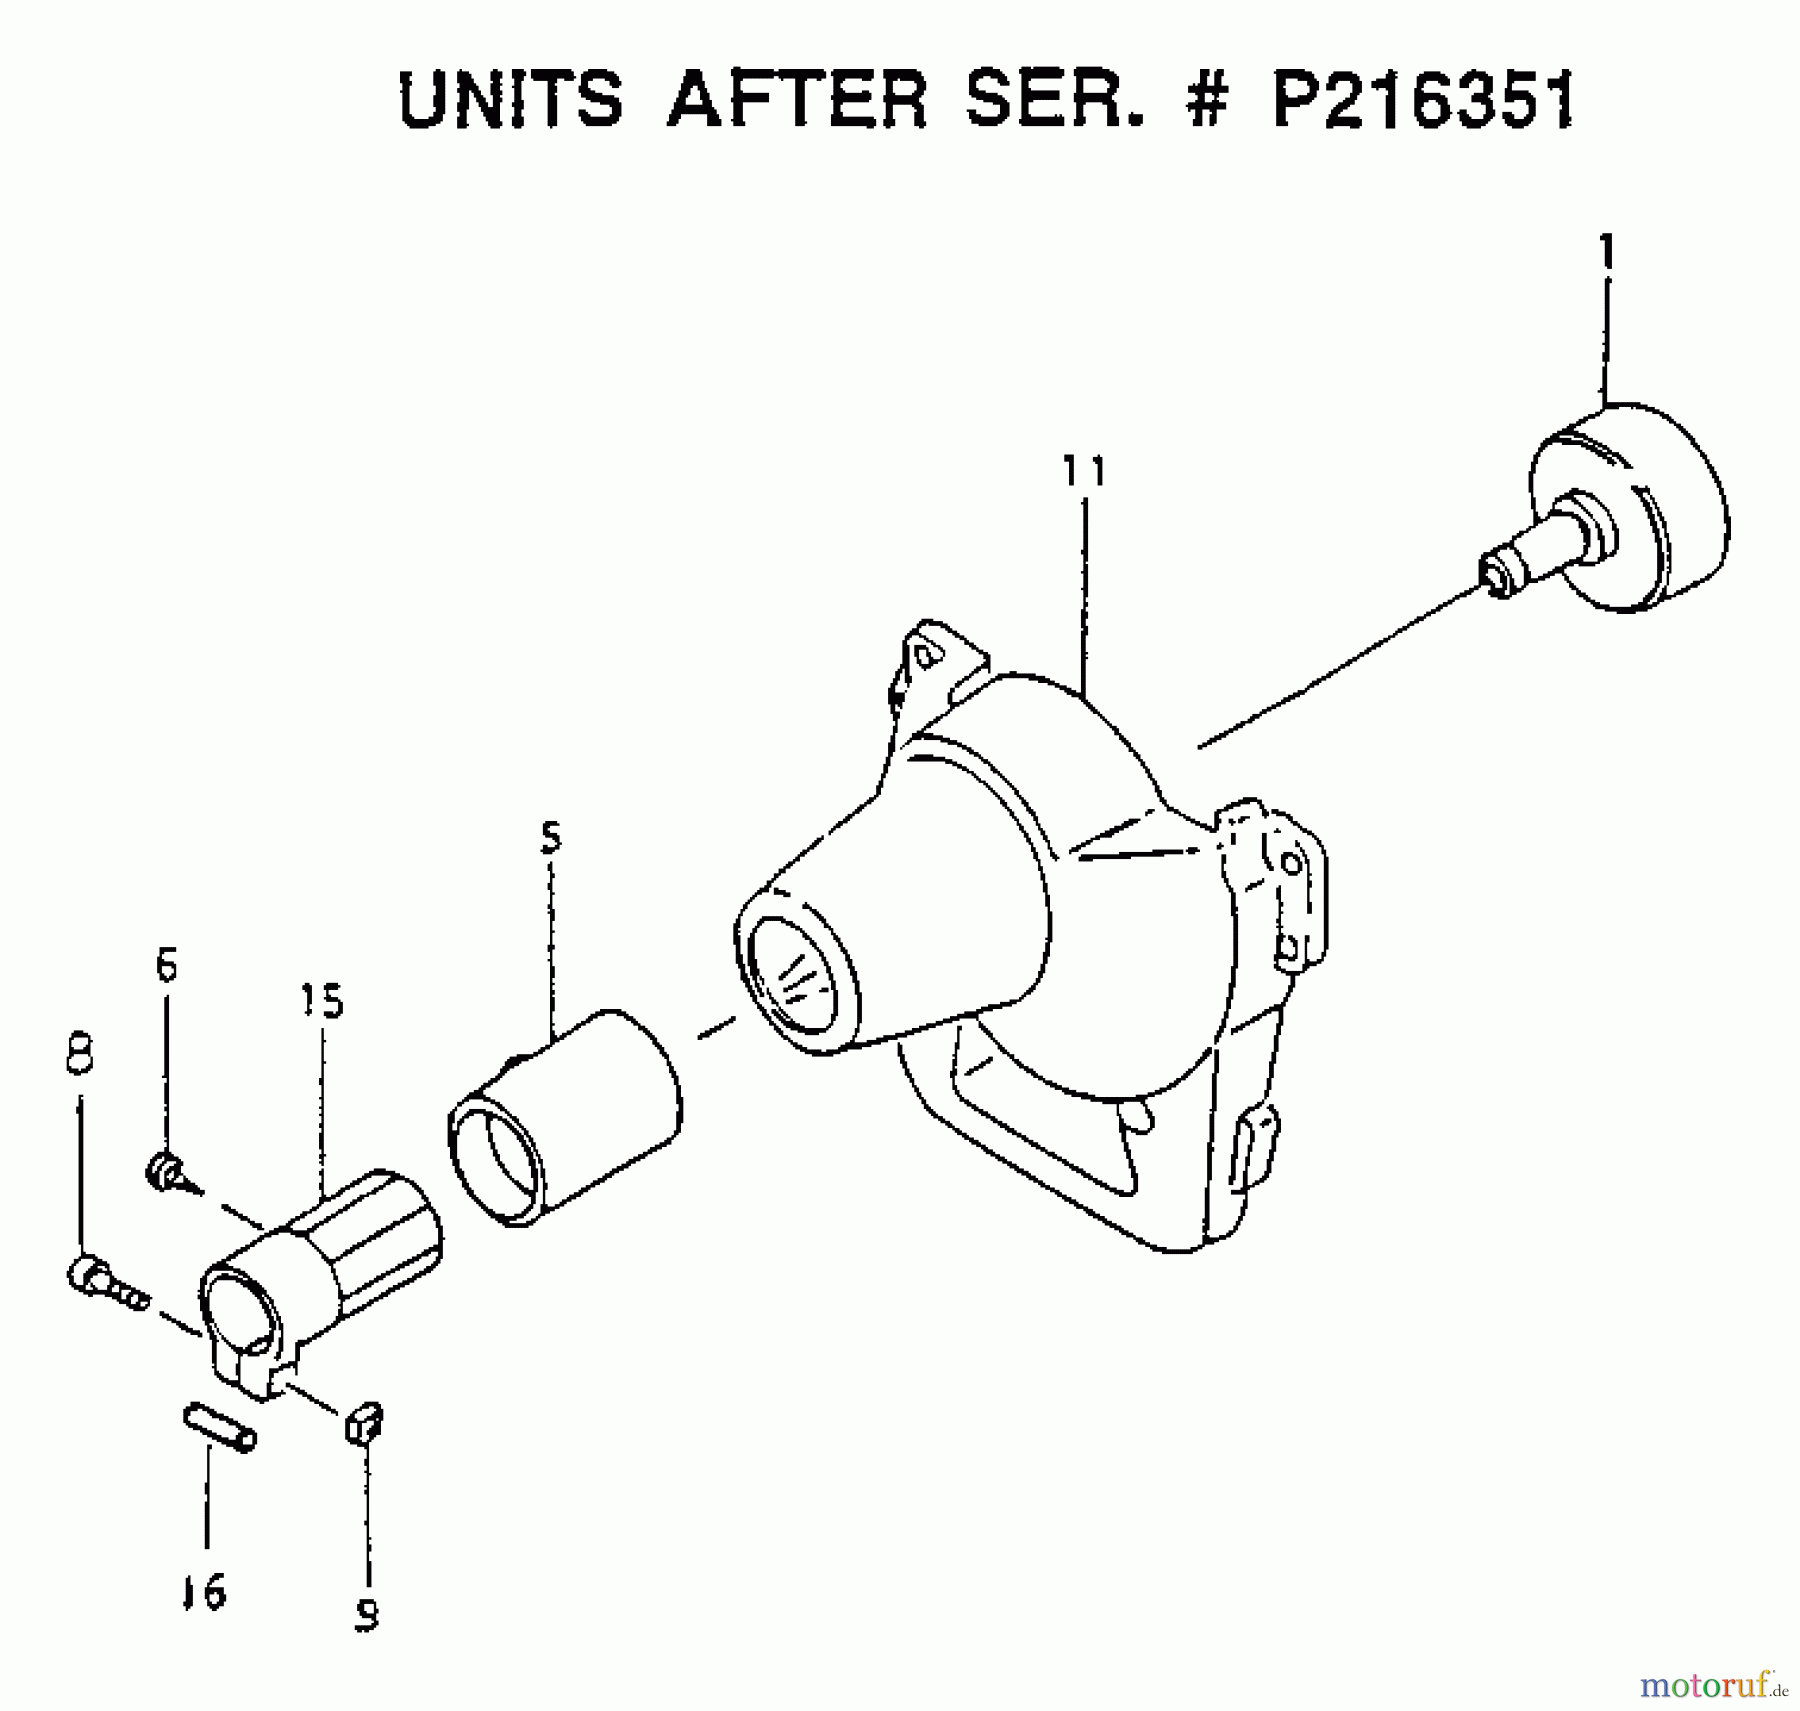  Tanaka Trimmer, Motorsensen TBC-300 - Tanaka Brush Cutter Clutch Case - Units After Ser. # P216351